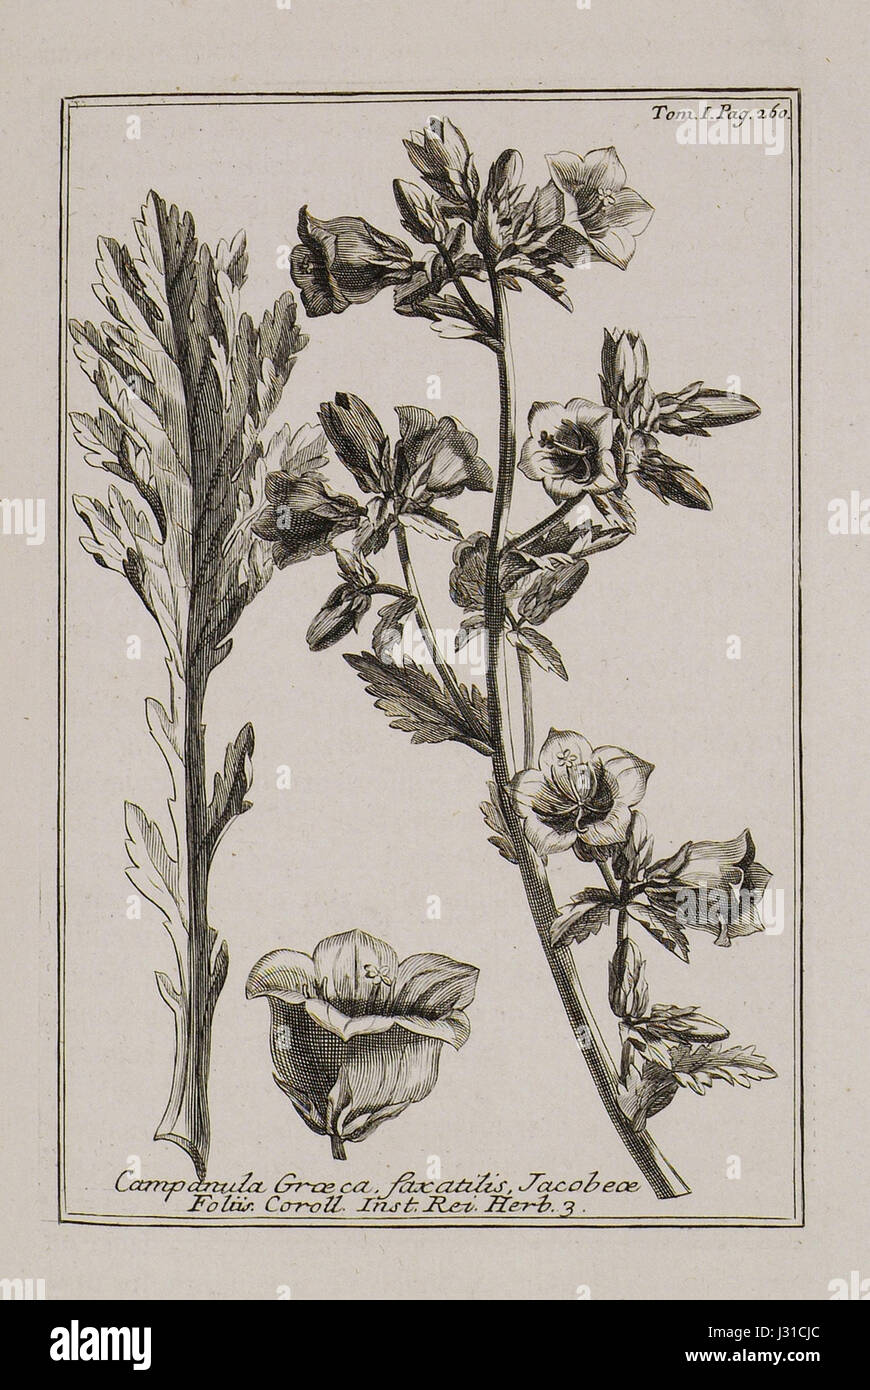 Campanula Graeca, faxatilis Jacobae folio Coroll Inst Rei herb 3 - Tournefort Joseph Pitton De - 1717 Stock Photo